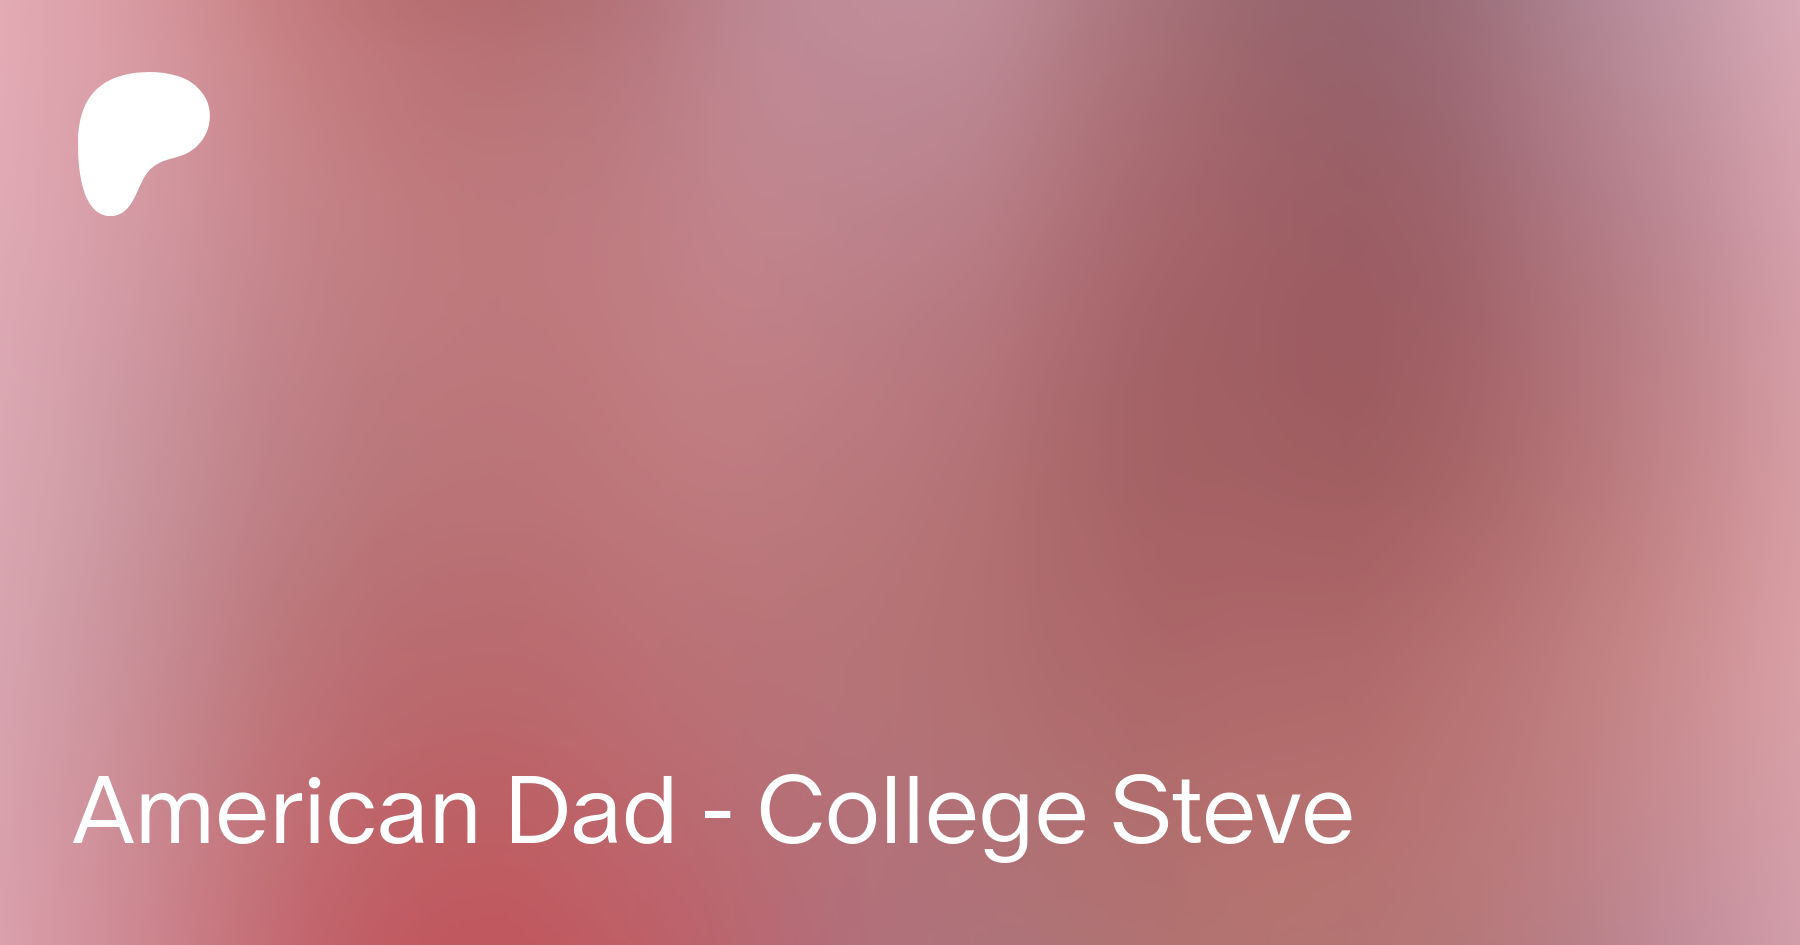 College Steve - Spageta 